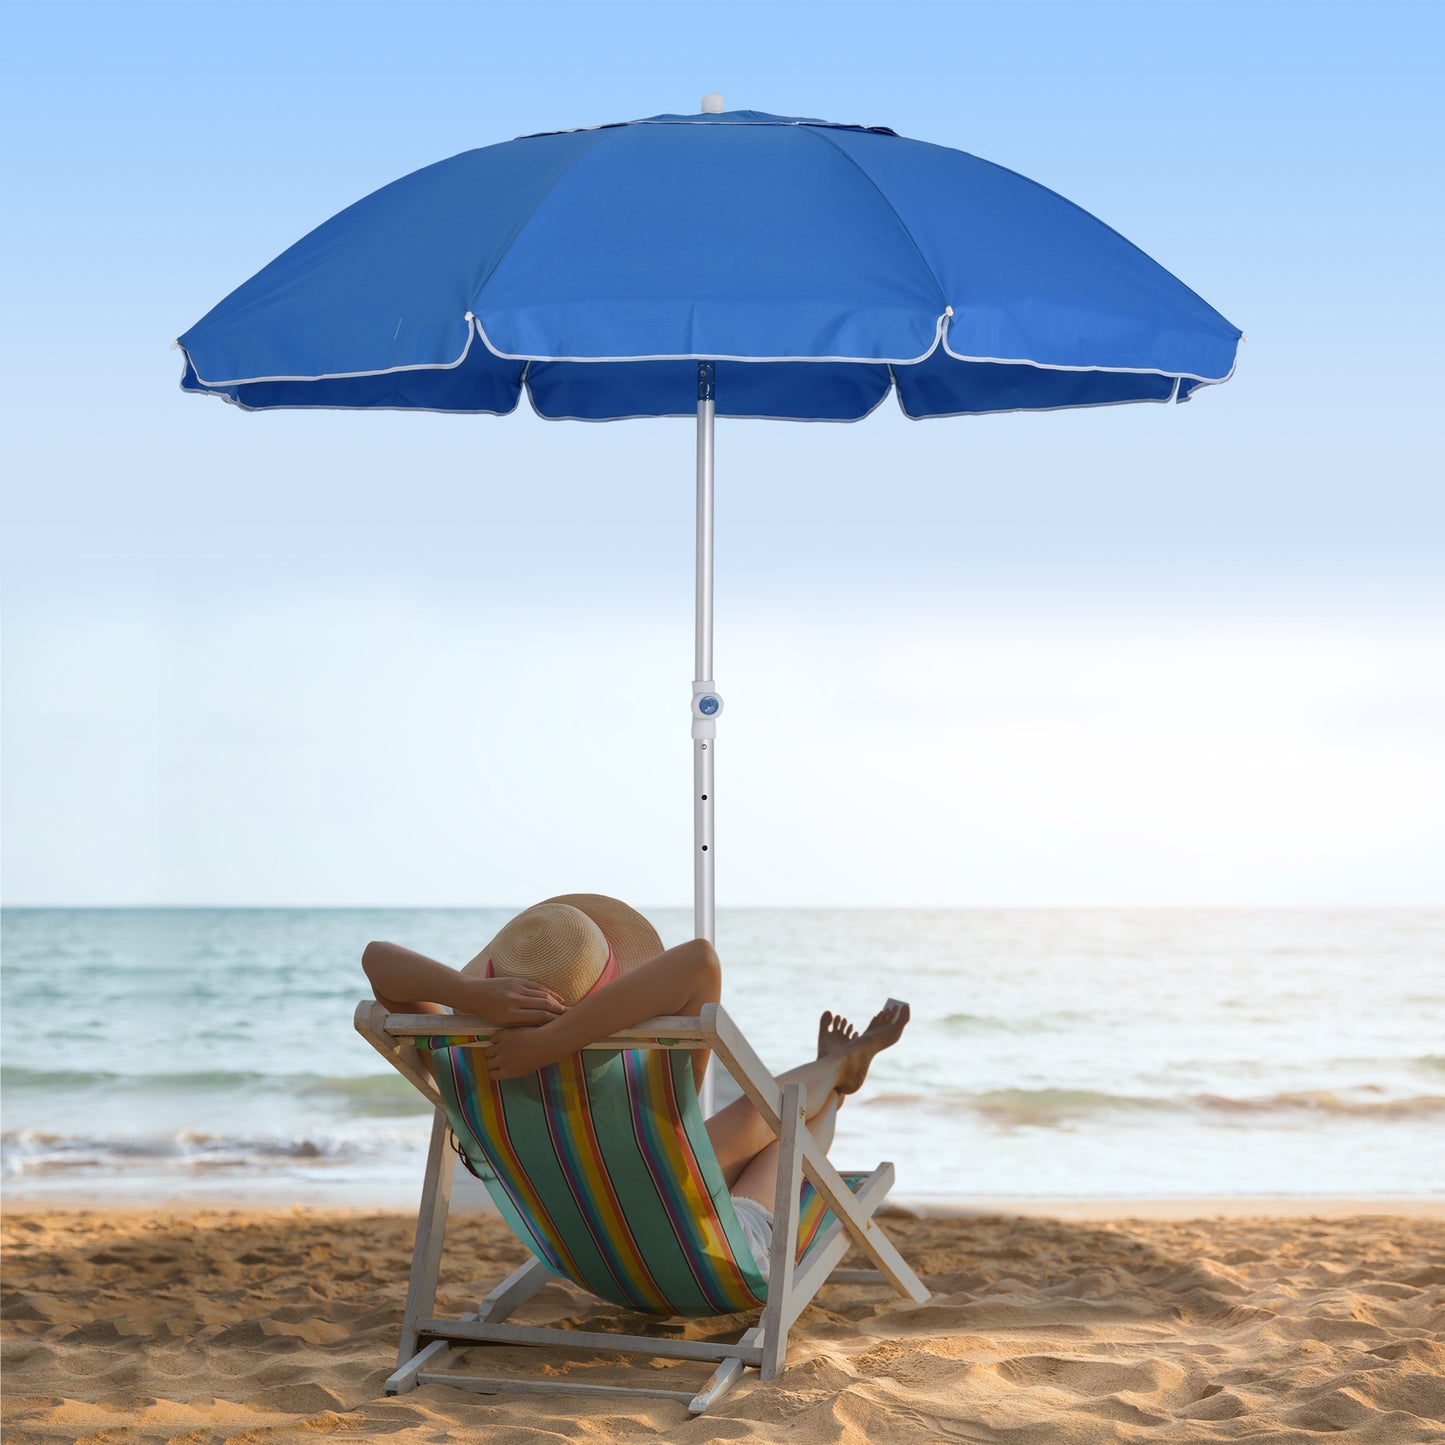 Outsunny Arc. 1.9m Beach Umbrella w/ Adjustable Angle Pointed Design Carry Bag Blue